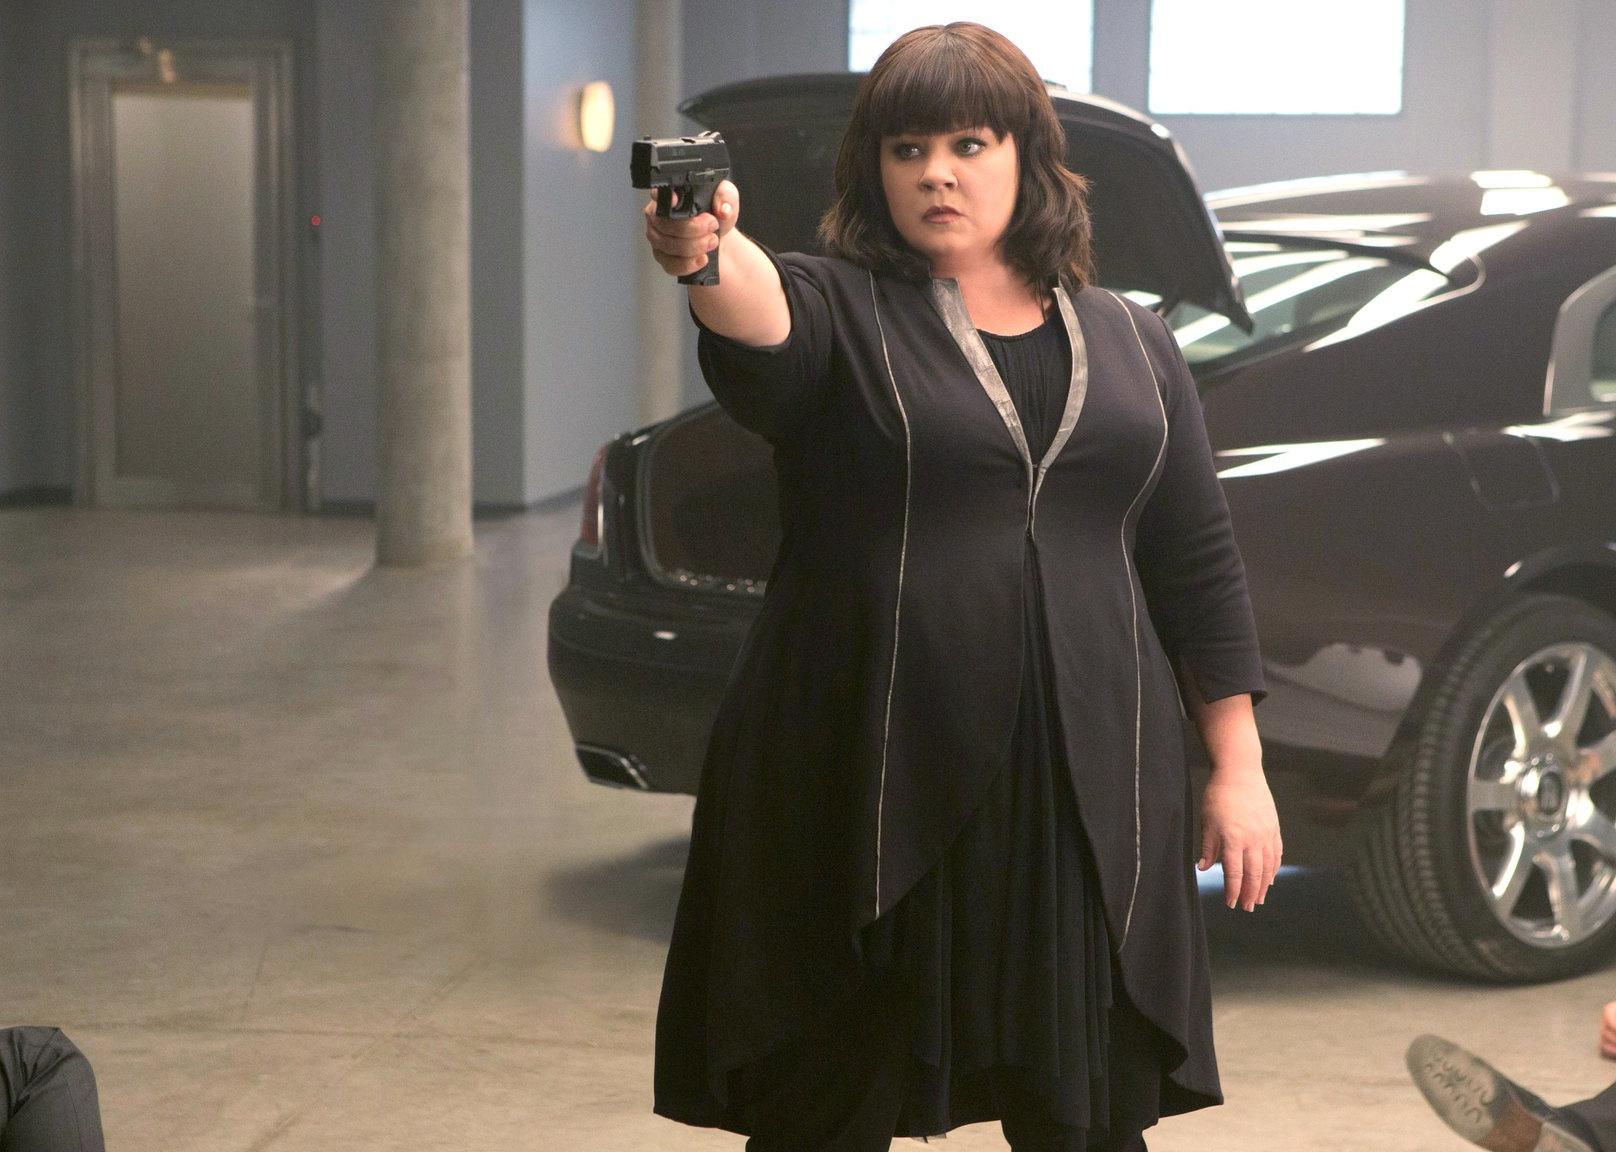 Melissa McCarthy in all black pointing a gun in a parking garage.